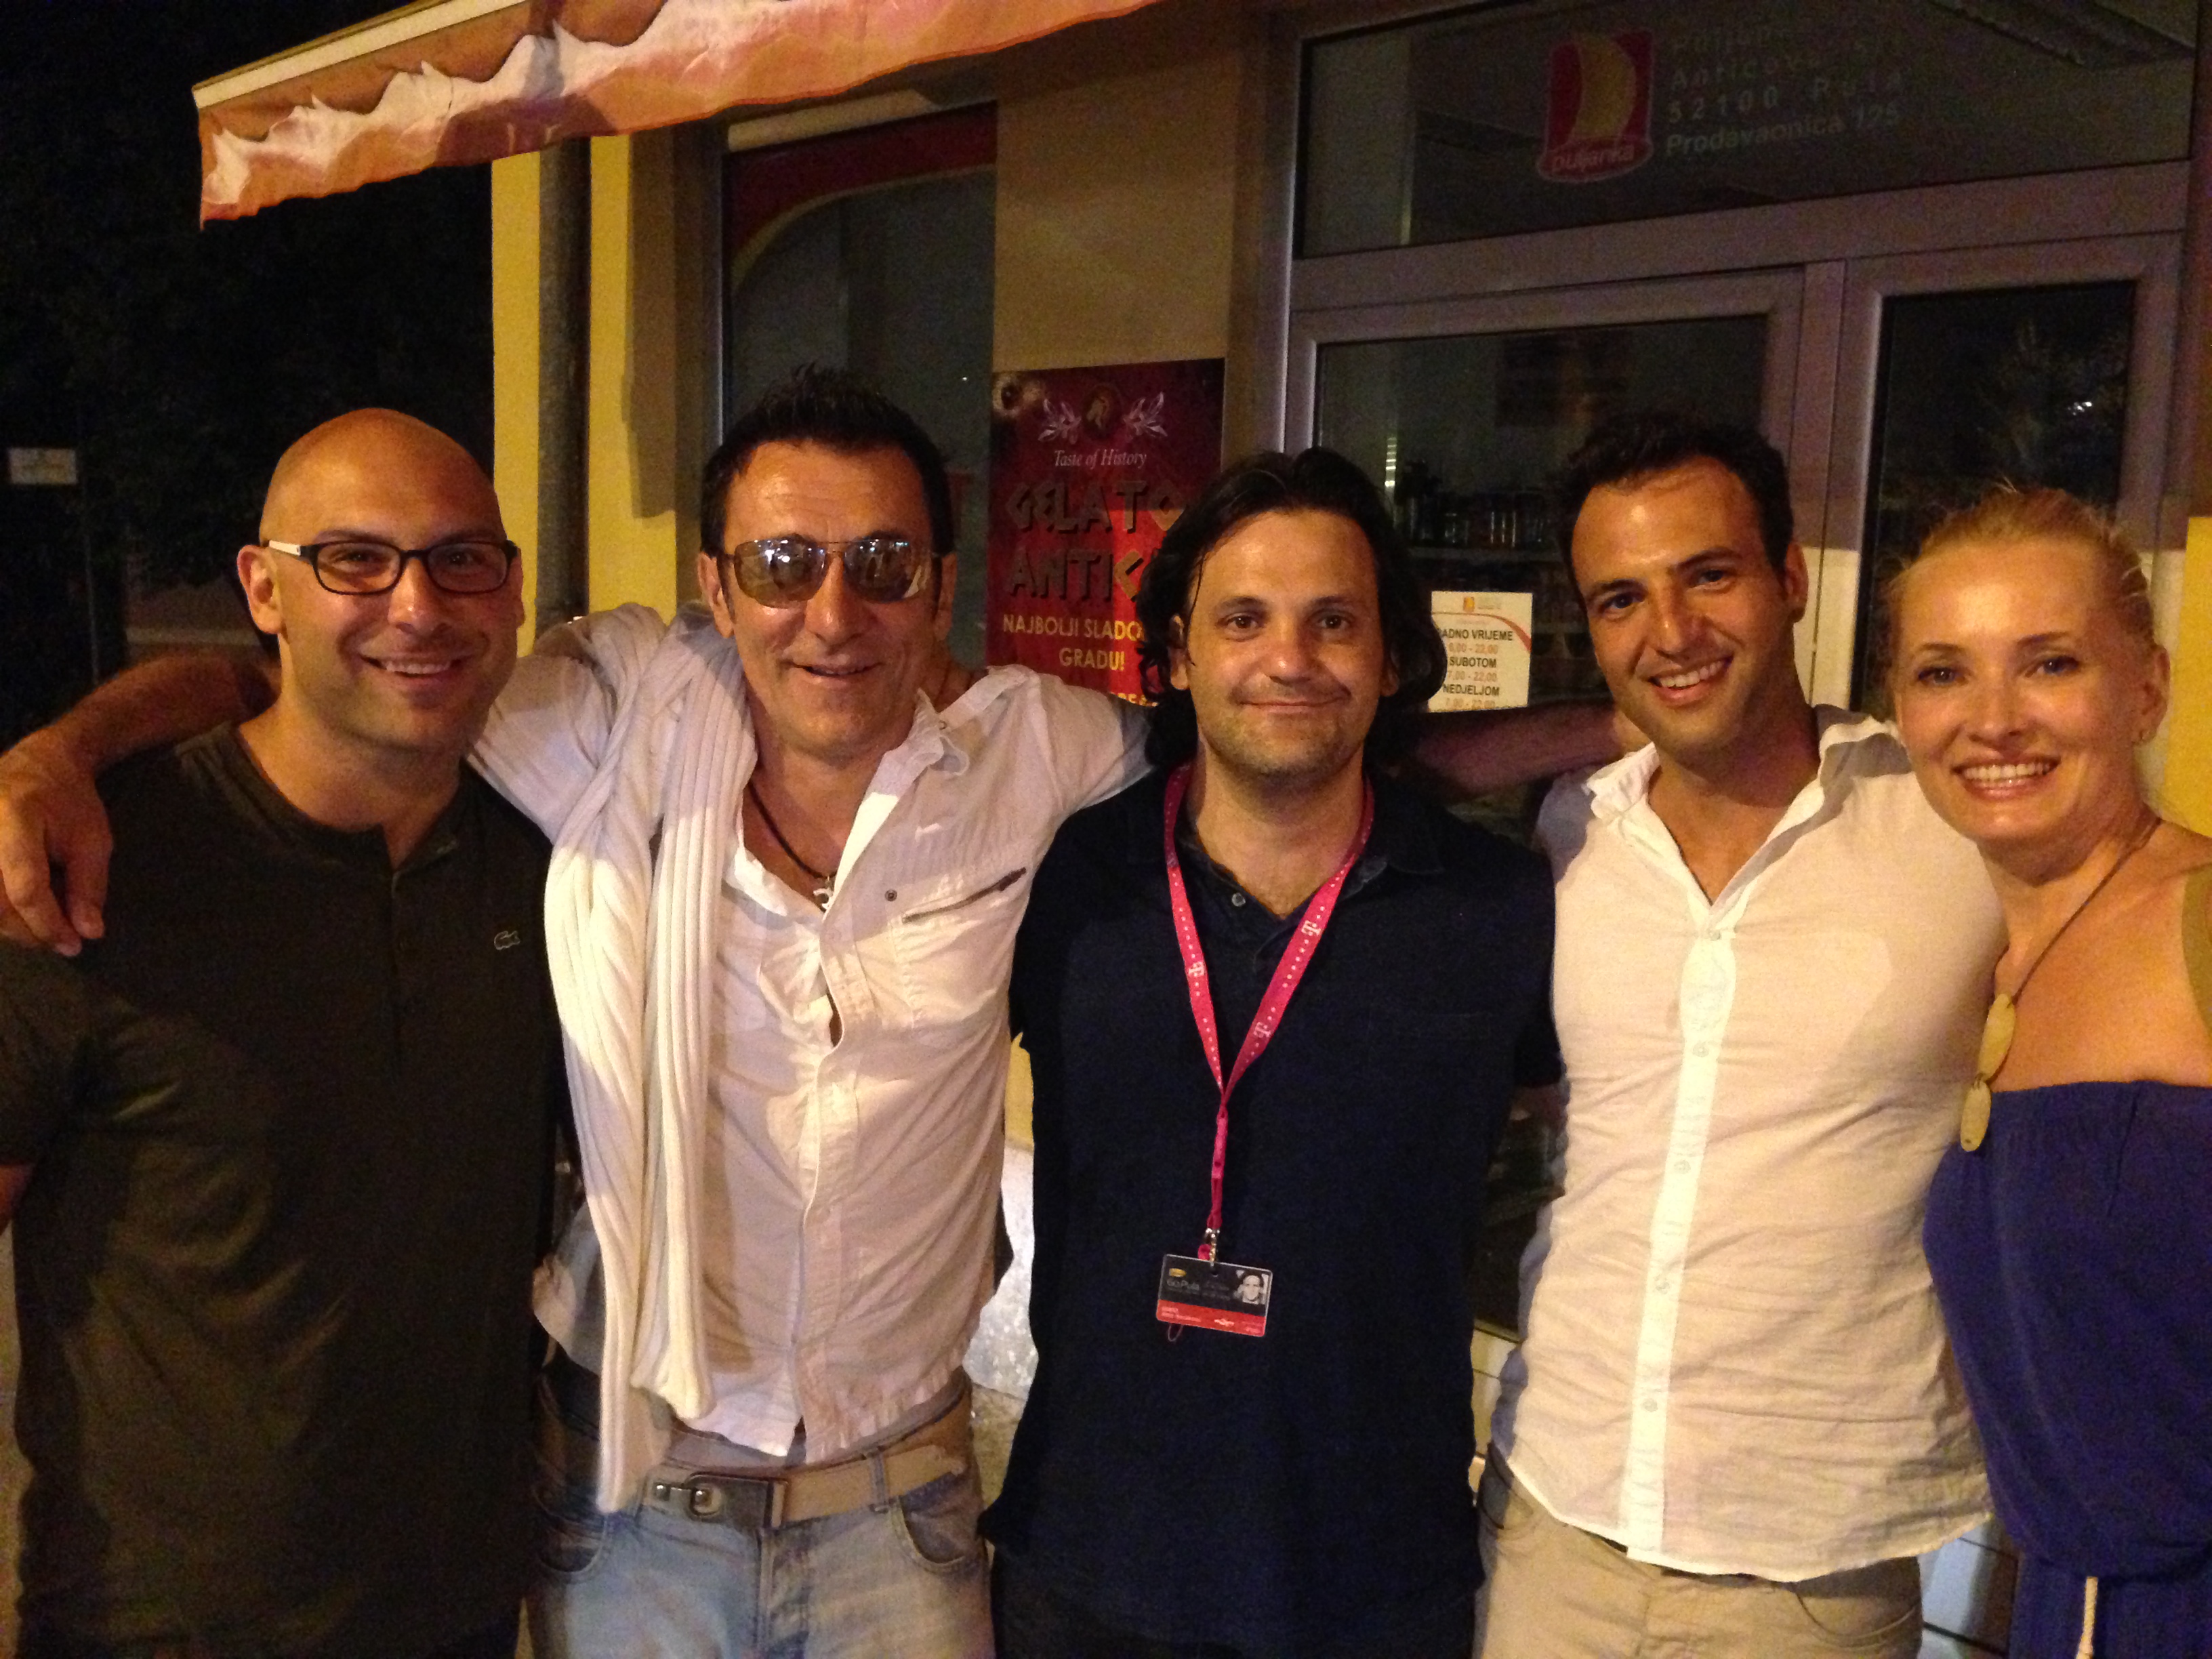 John Drazic, Branko Djuric, Ante Novakovic, Kresh Novakovic, Tanja Ribic at the Pula Film Festival Croatia for a screening of The Fix